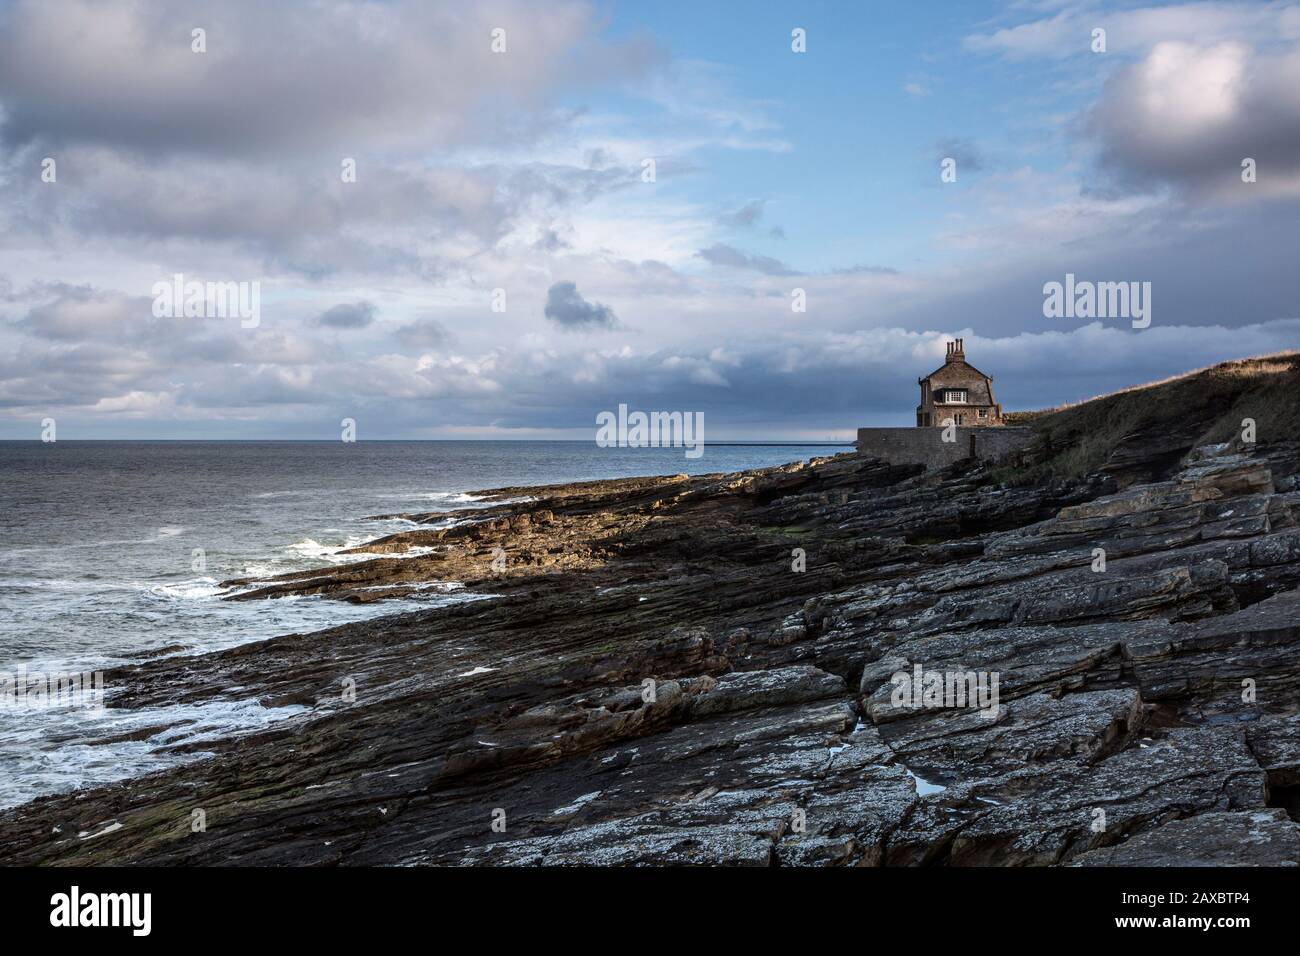 House overlooking rocky seascape Howick Northumberland UK Stock Photo